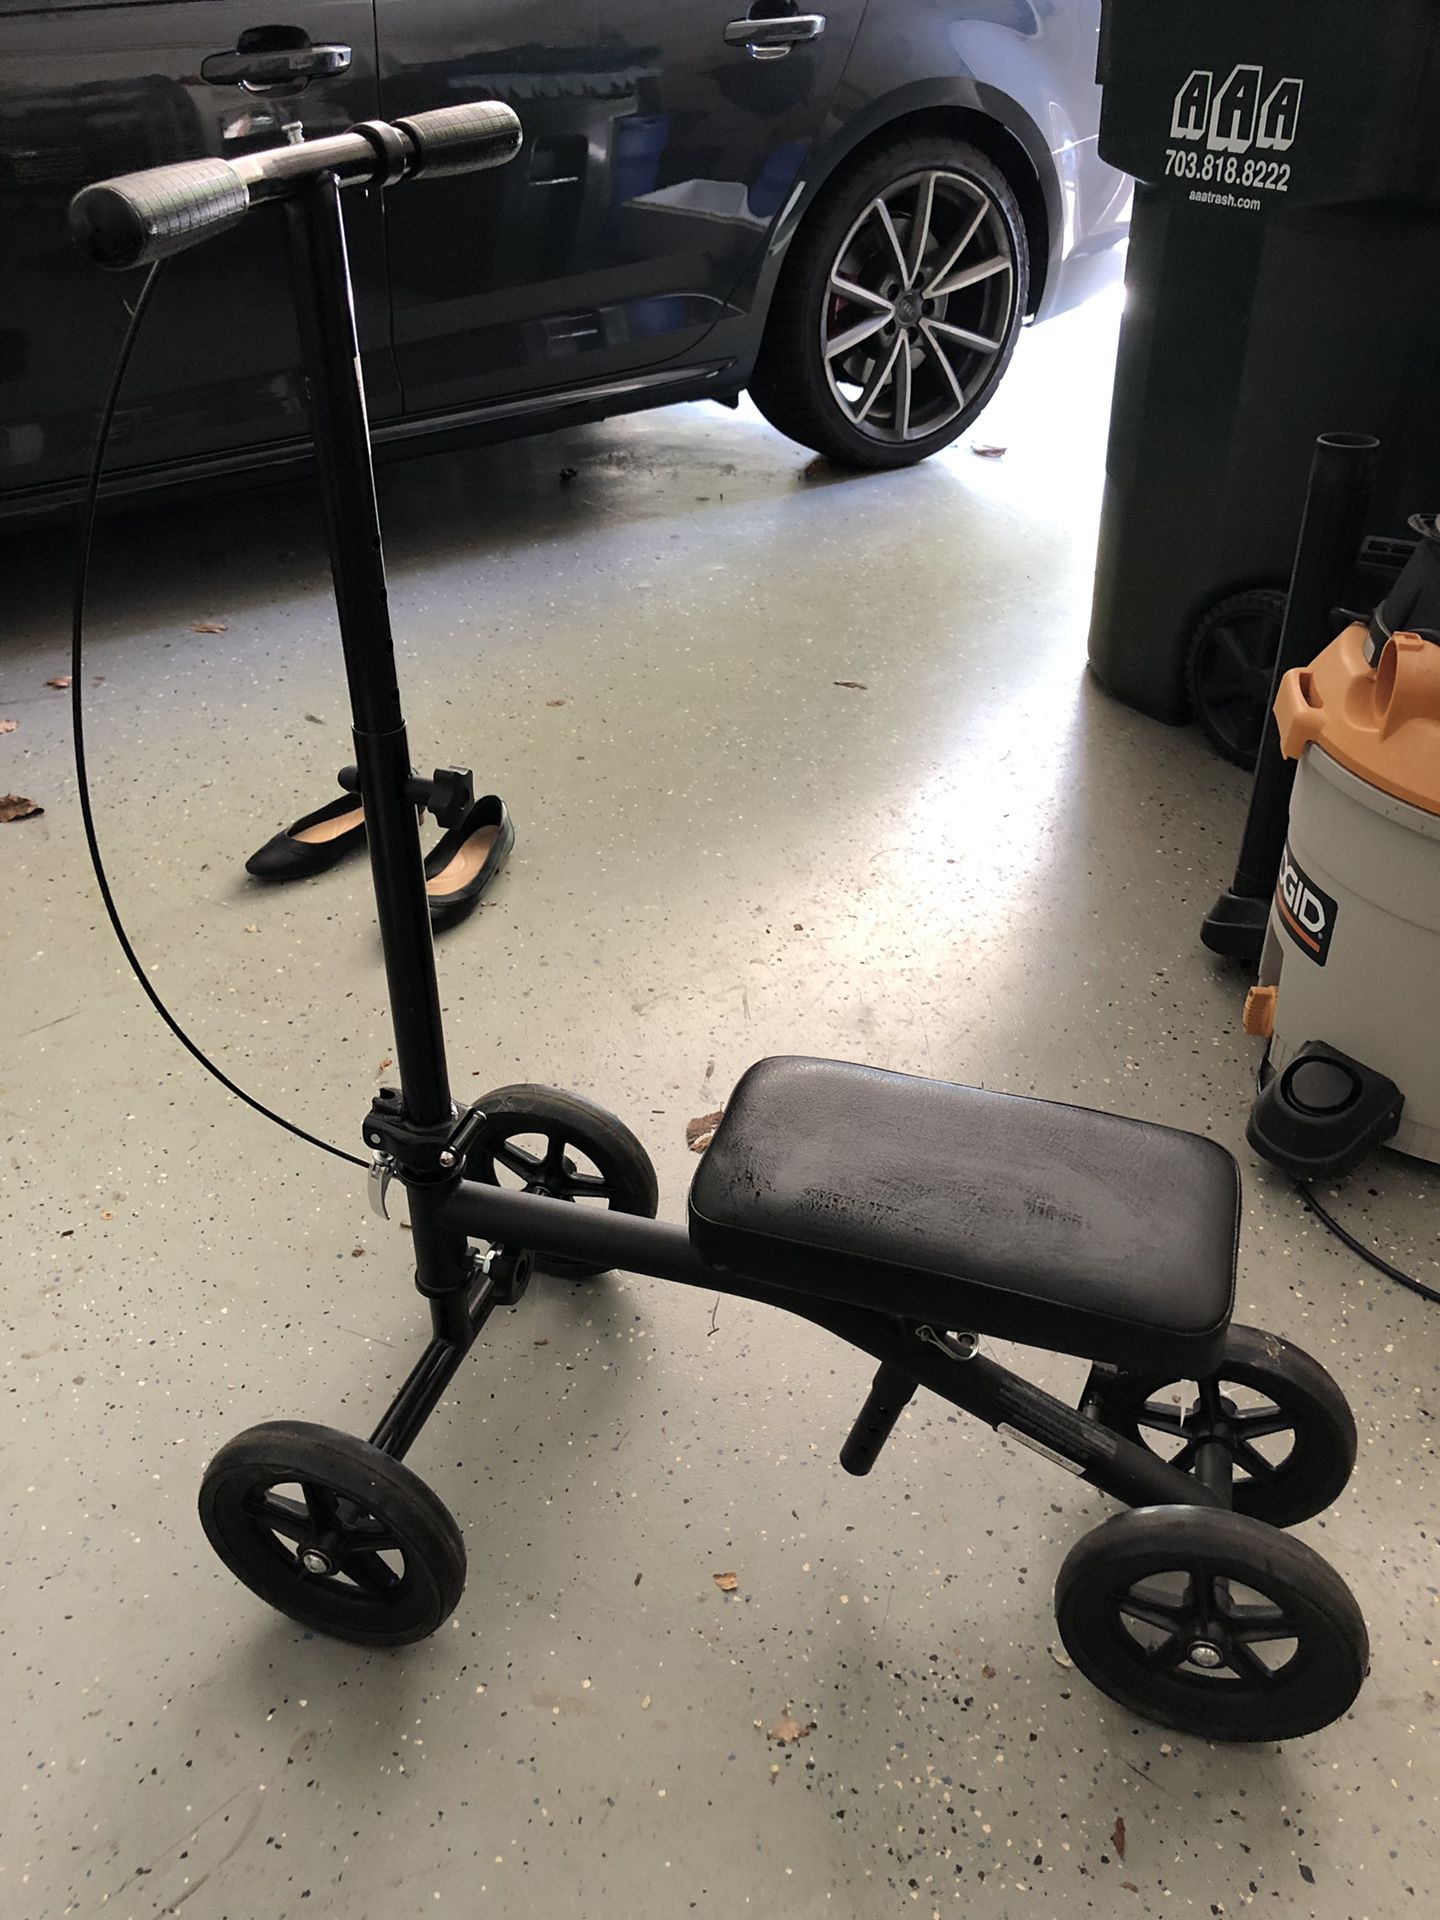 Knee scooter for injured leg